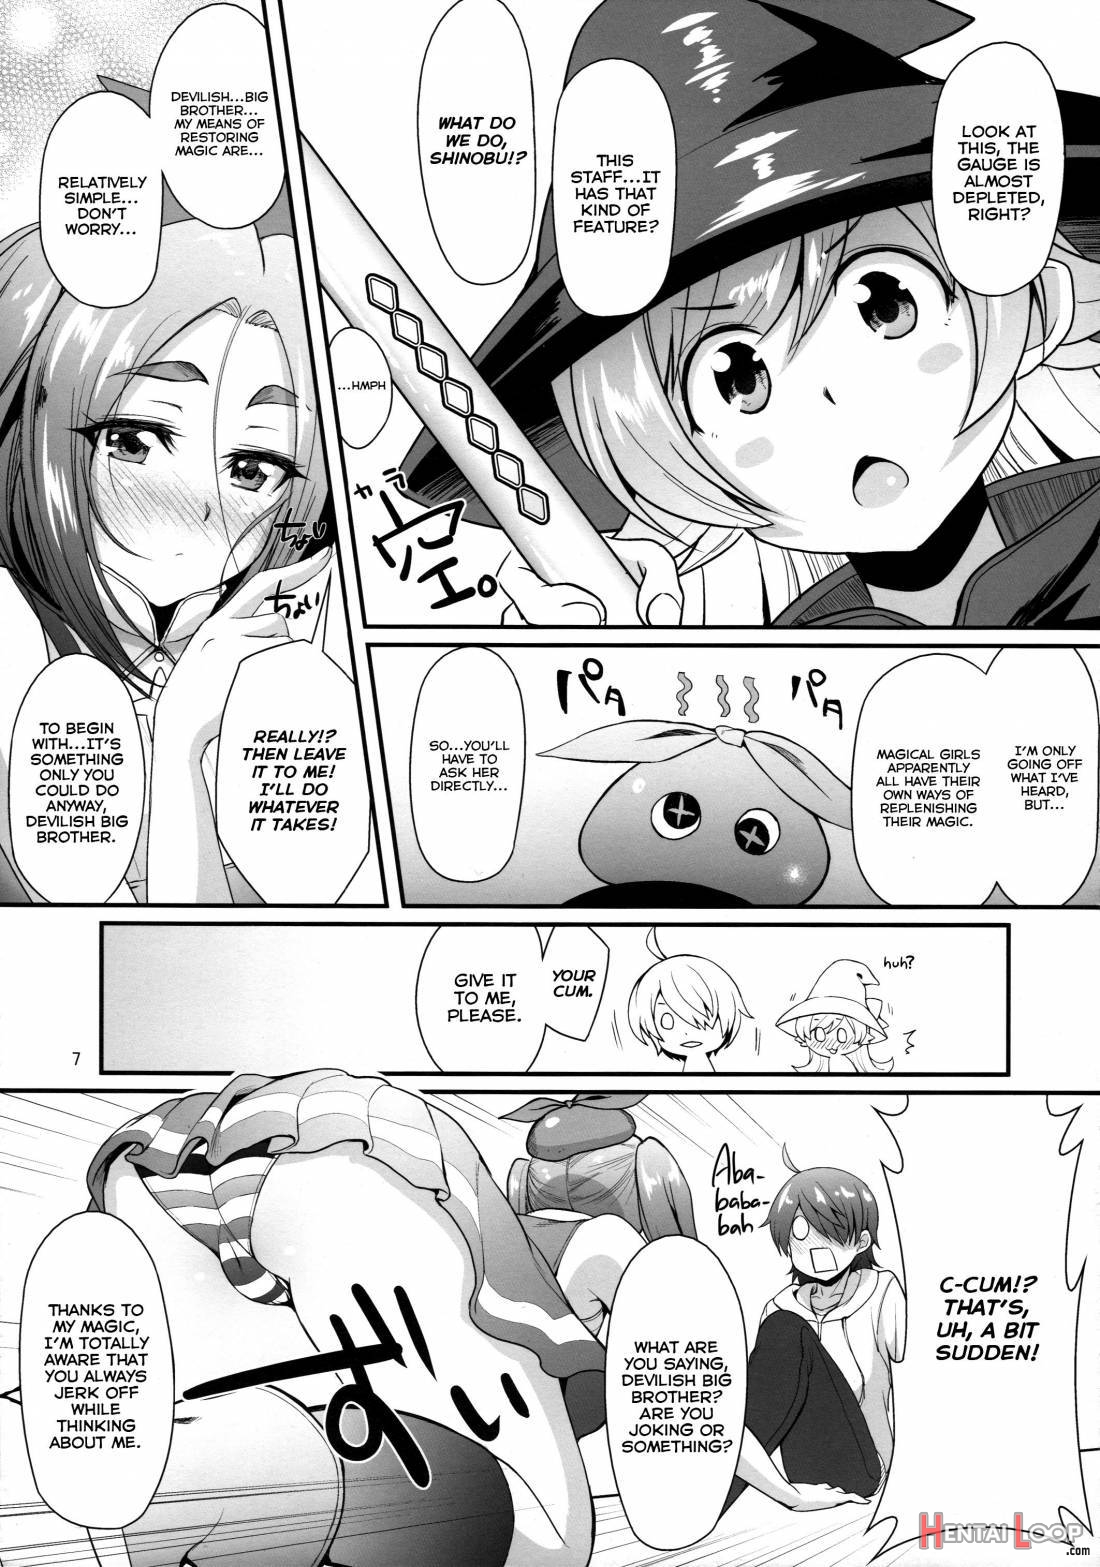 Pachimonogatari Part 11: Yotsugi Magika page 7